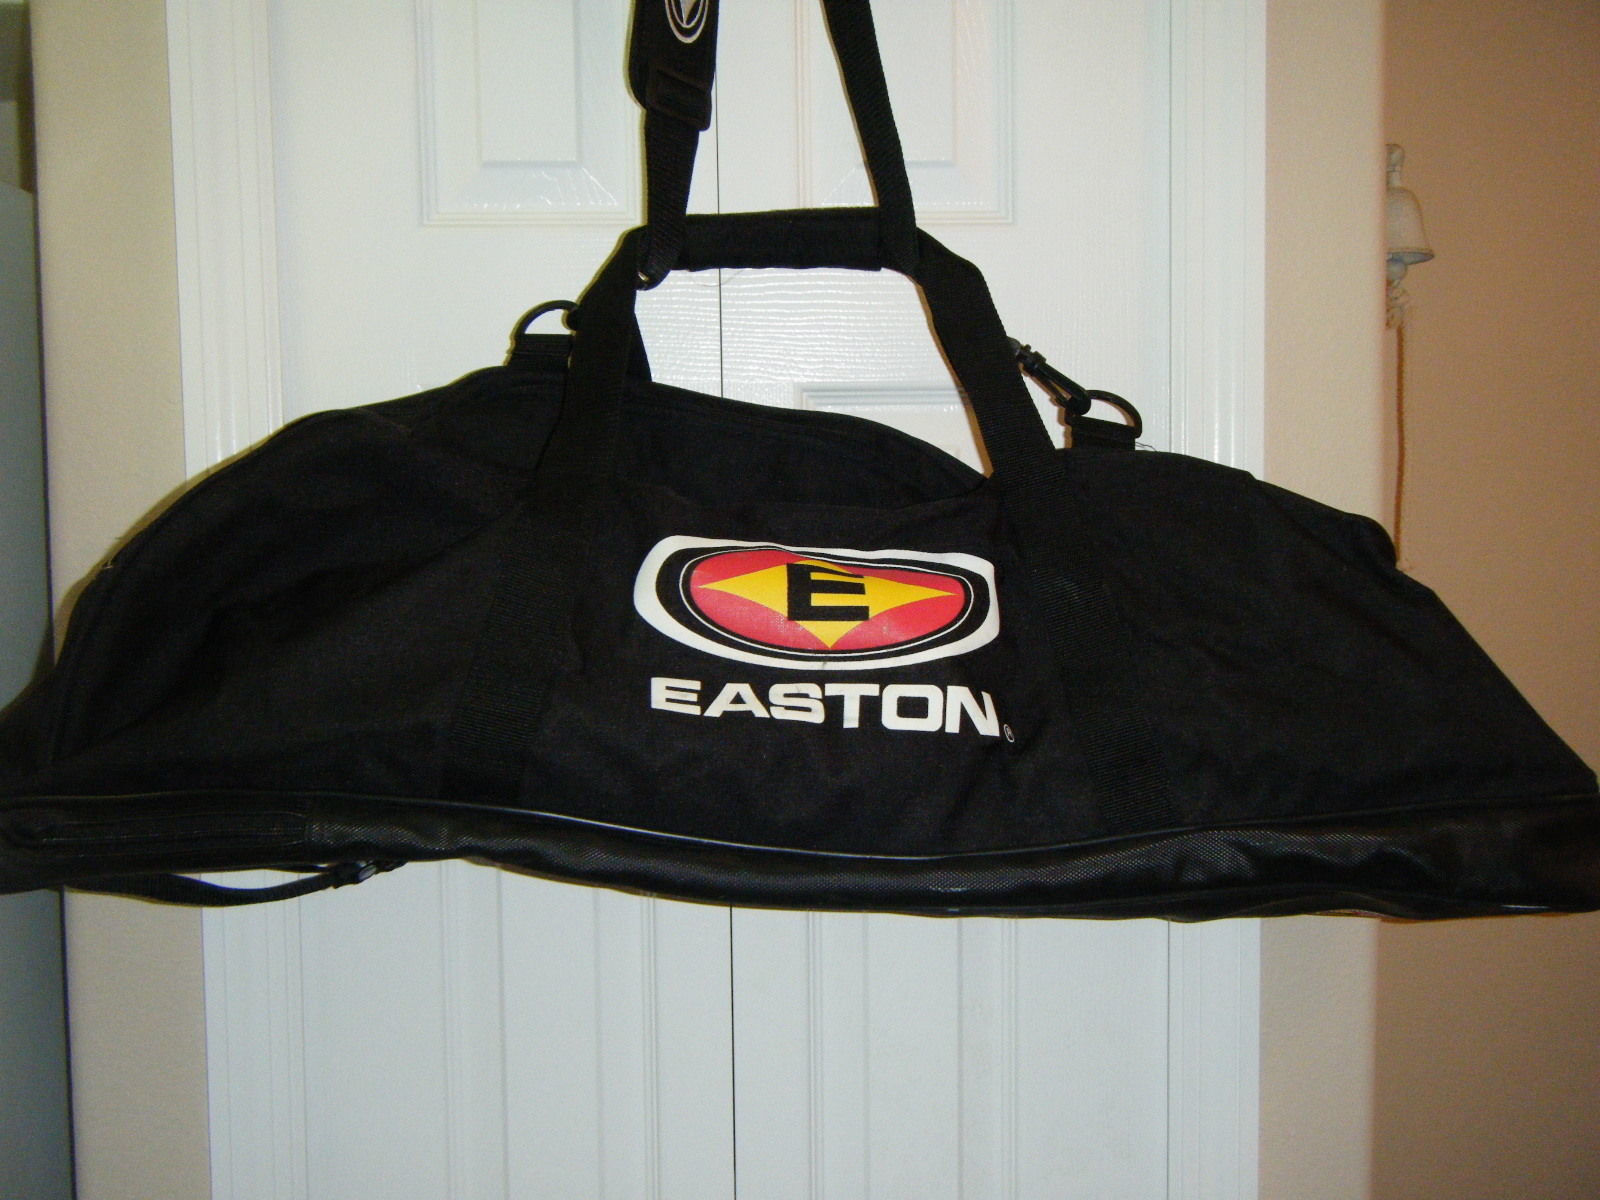 EASTON BASEBALL EQUIPMENT BAG 33 X 10 - $17.99